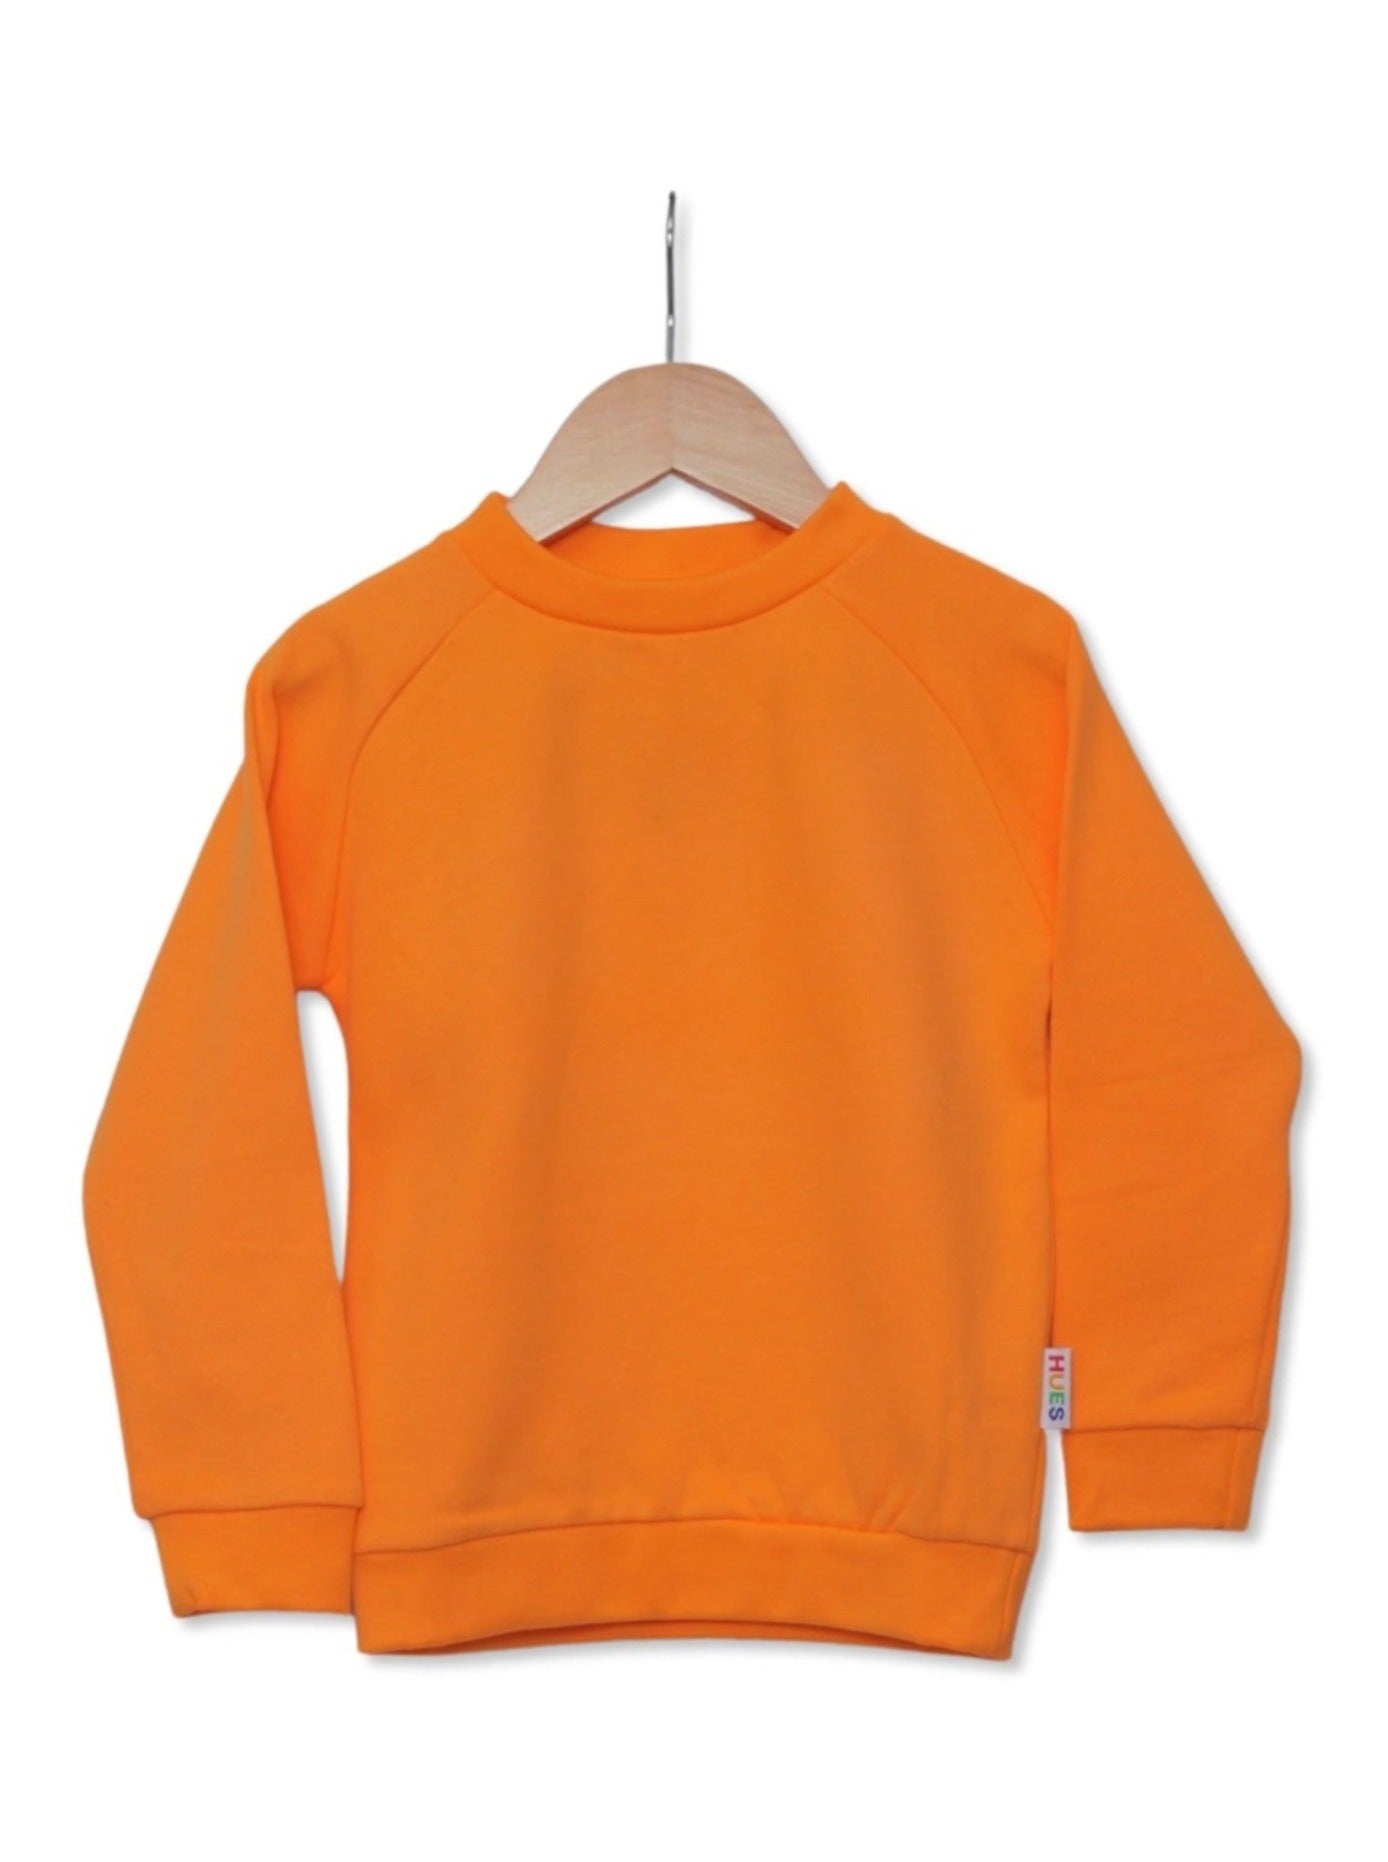 Kids Orange Unisex Jumper Front View- Hues Clothing